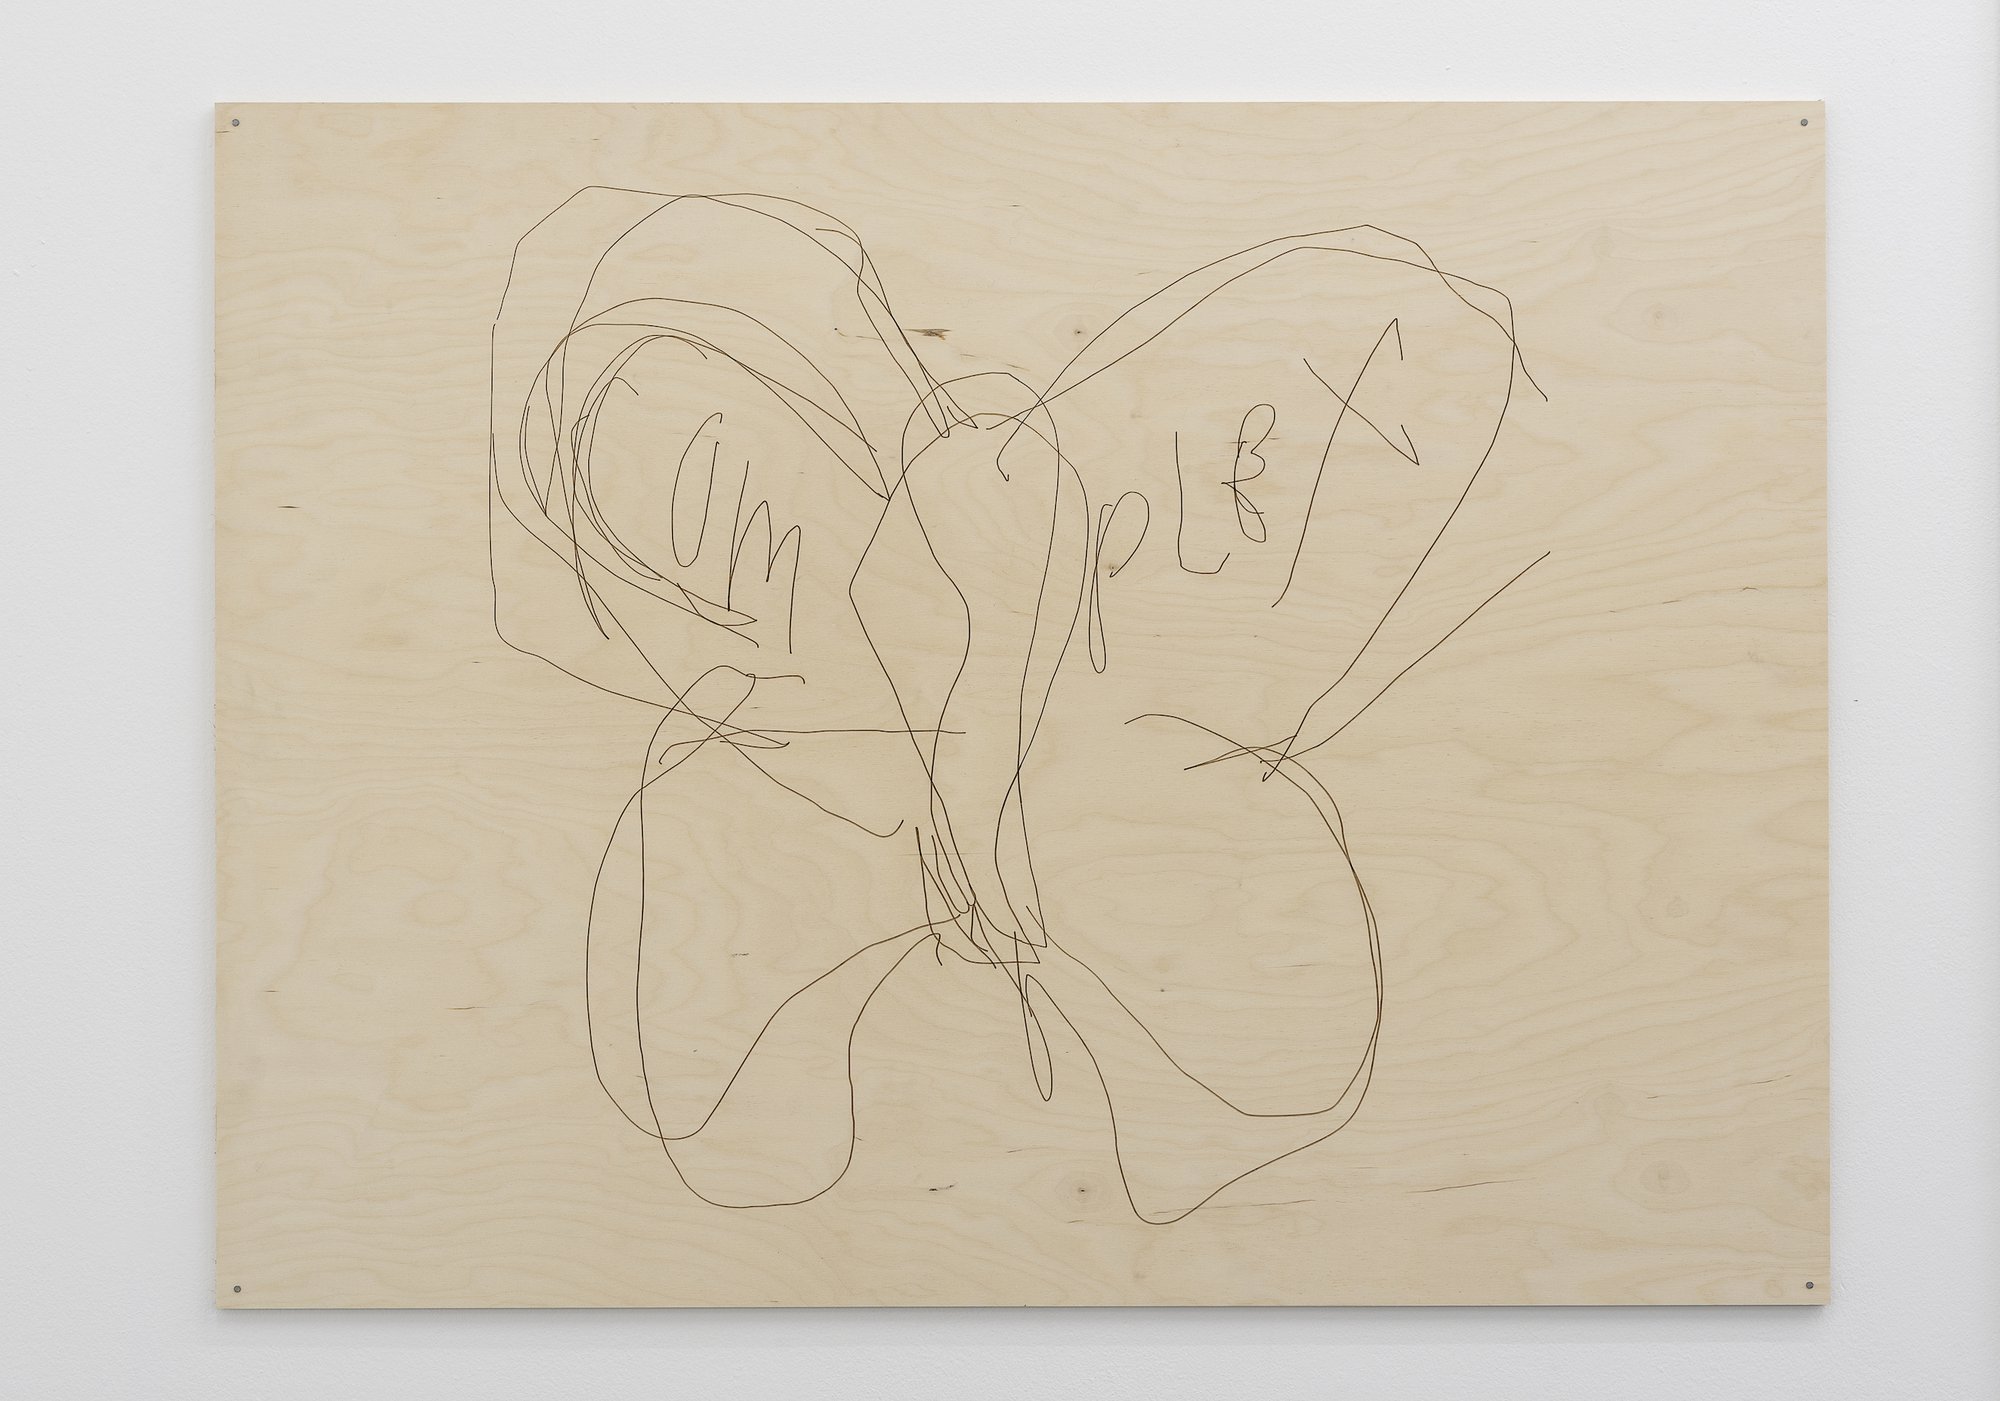 Sidsel Meineche Hansen, Untitled (laser cut drawing), laser-cut drawing on plywood, 90 x 120 cm, 2021